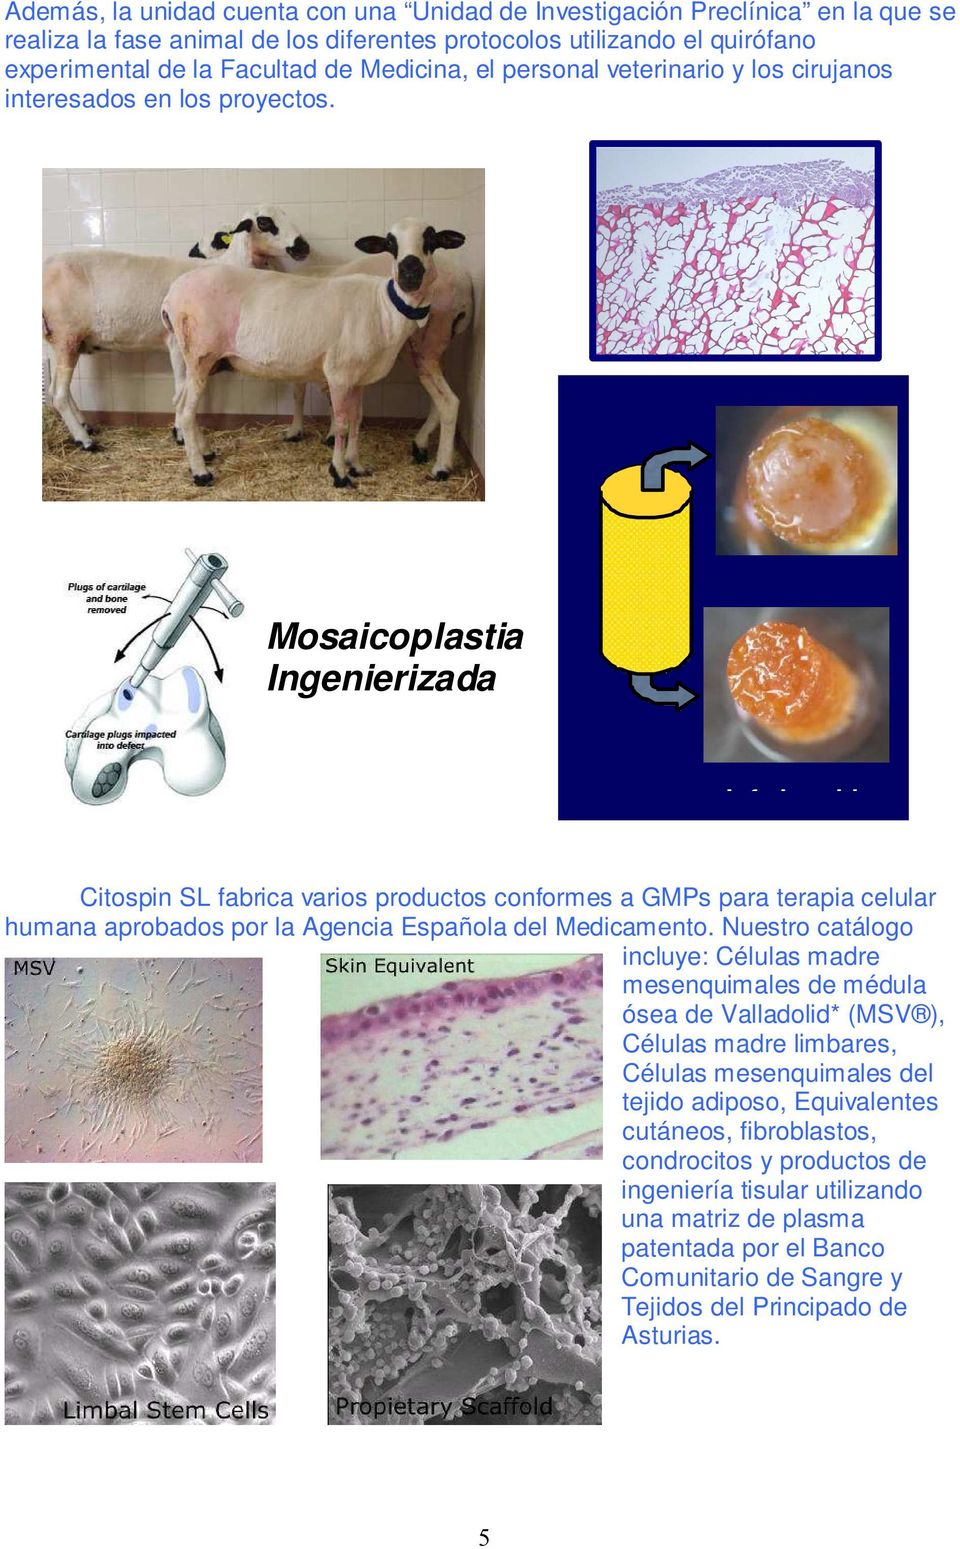 Superior side Mosaicoplastia Ingenierizada Inferior side Citospin SL fabrica varios productos conformes a GMPs para terapia celular humana aprobados por la Agencia Española del Medicamento.